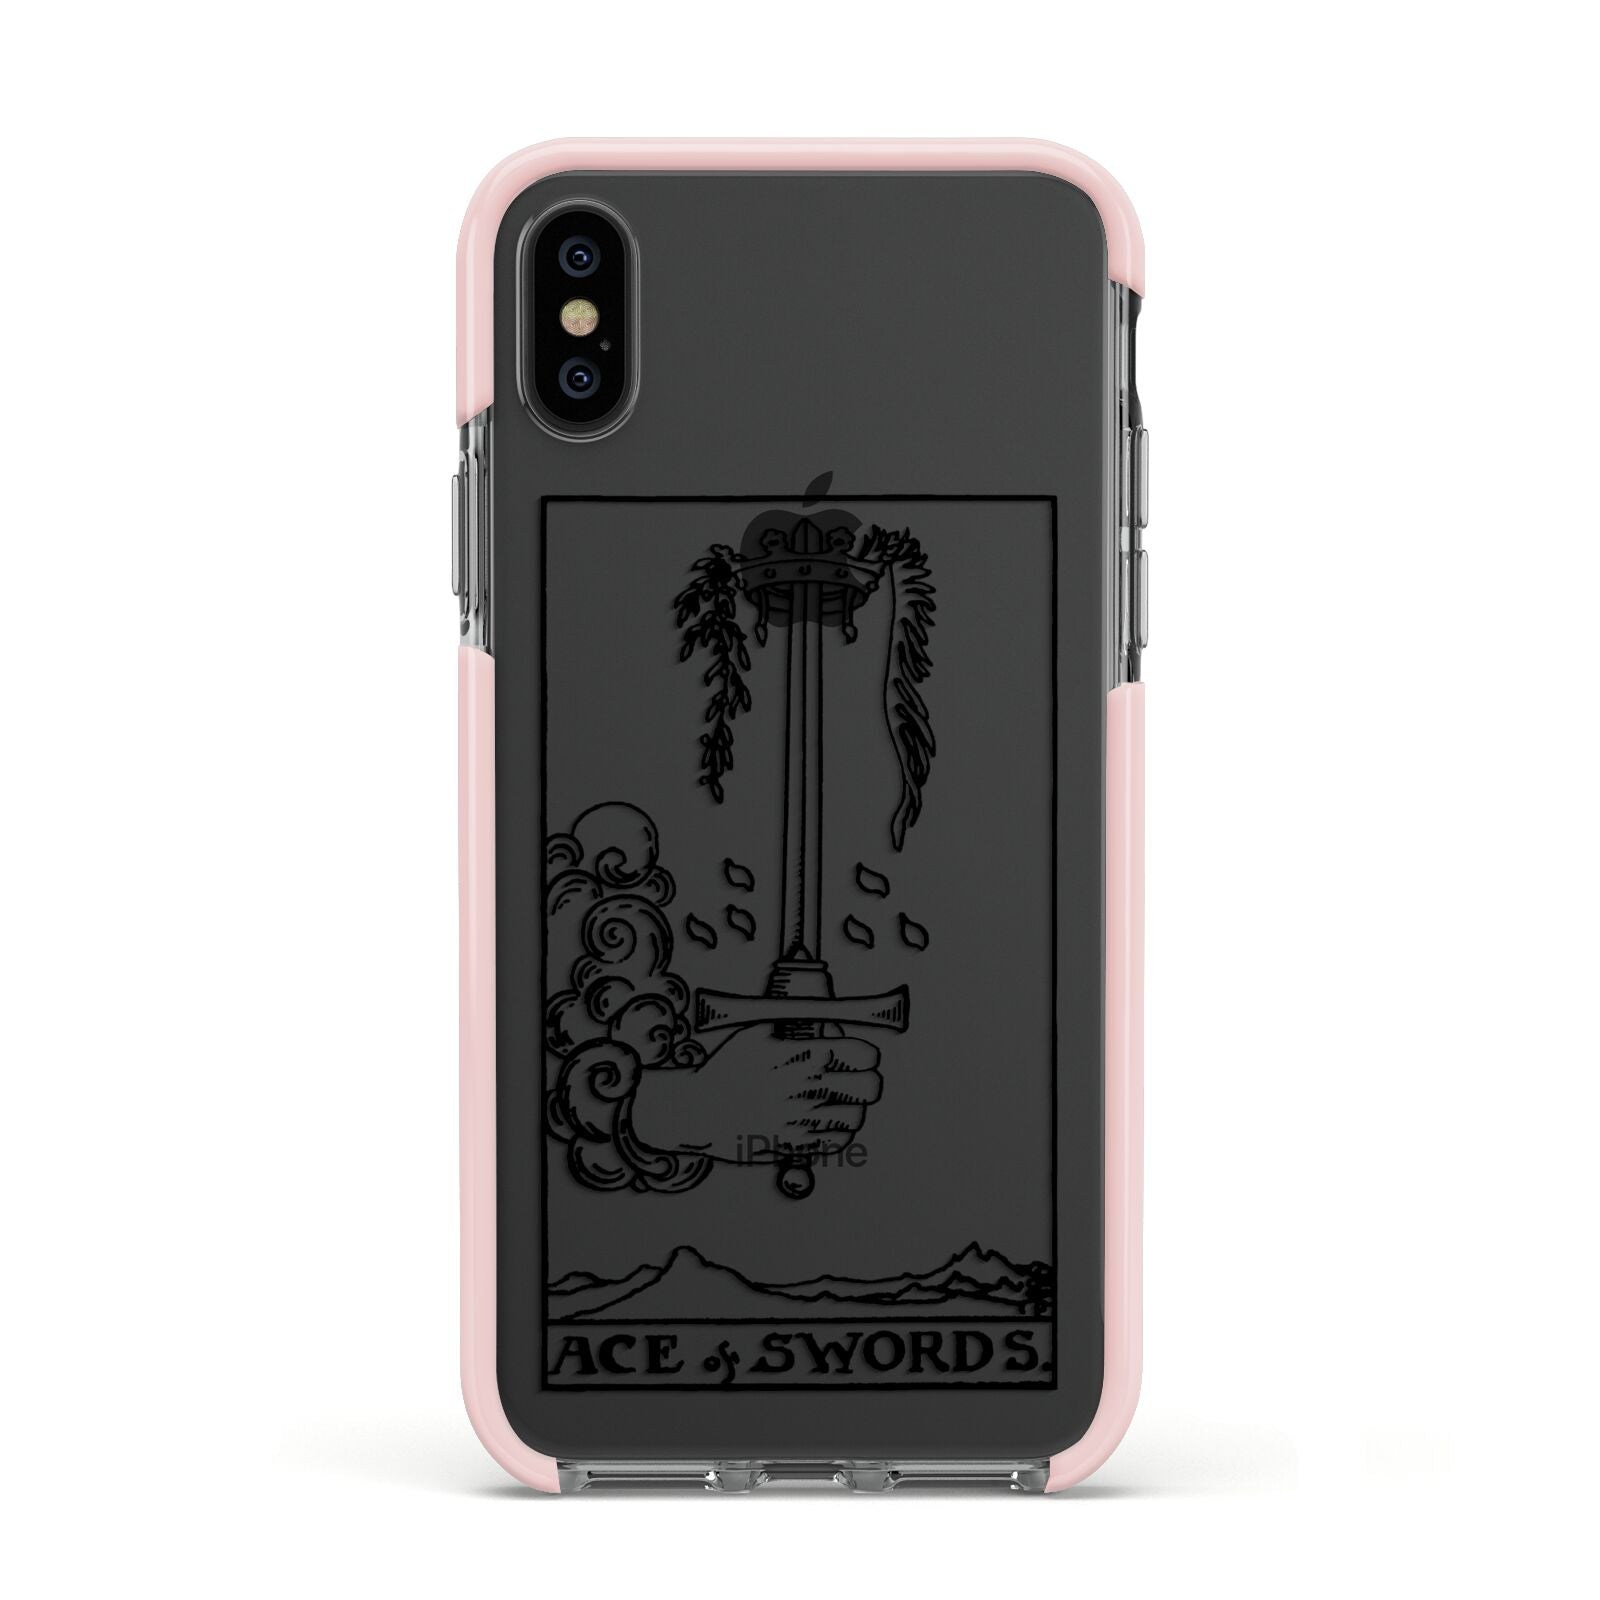 Ace of Swords Monochrome Apple iPhone Xs Impact Case Pink Edge on Black Phone